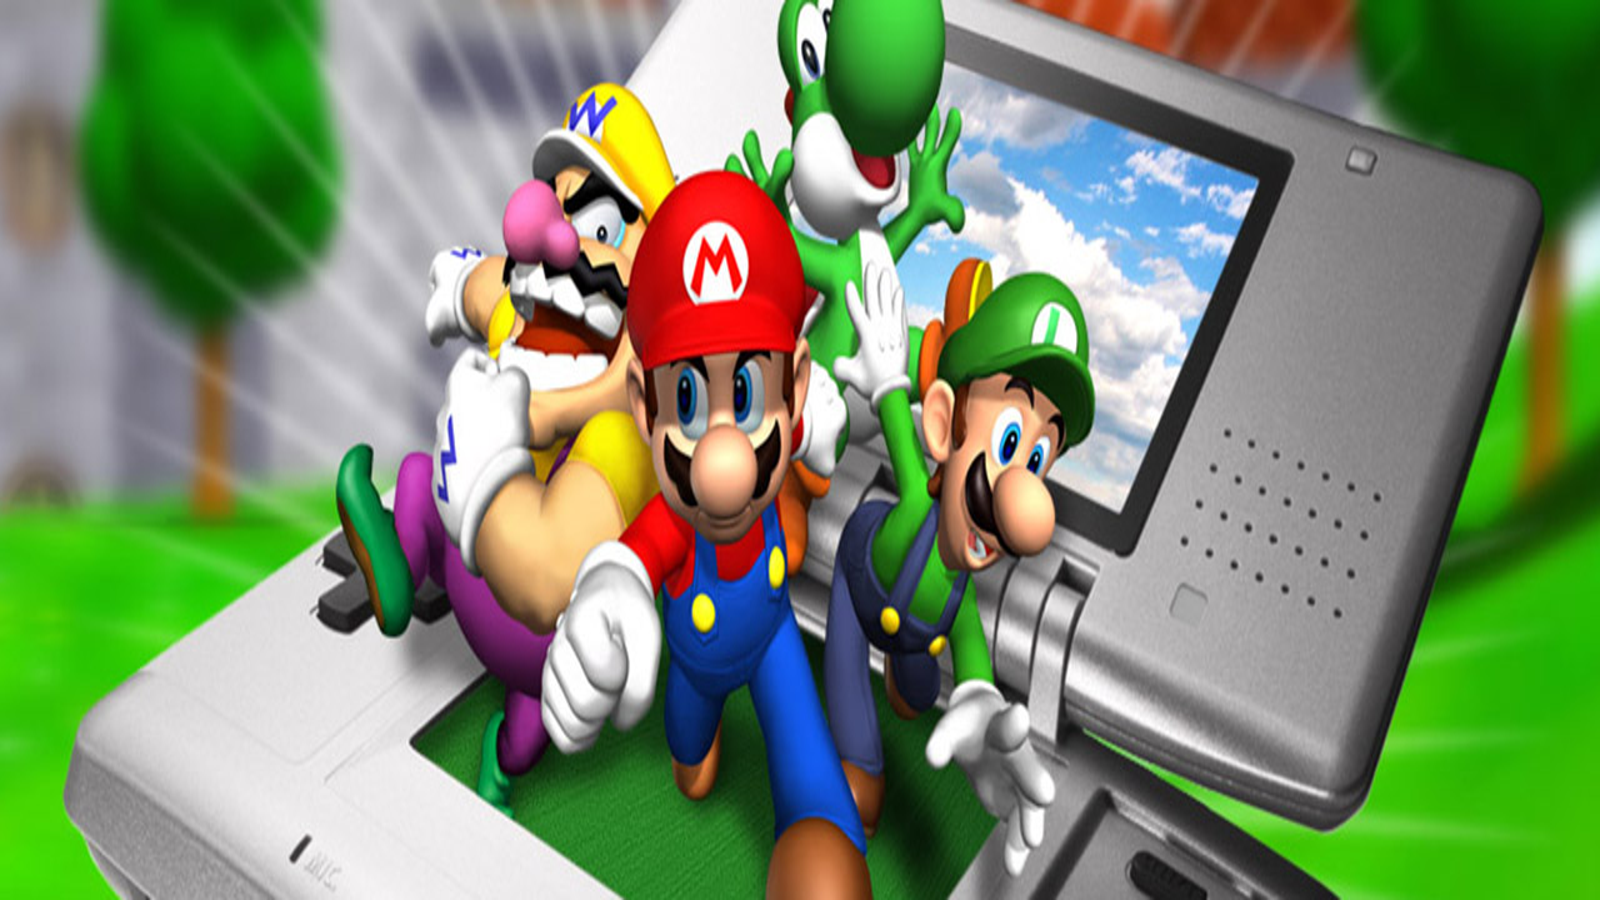 Супер Марио 64 Нинтендо ДС. Нинтендо группа. Человек играющий в Нинтендо ДС.